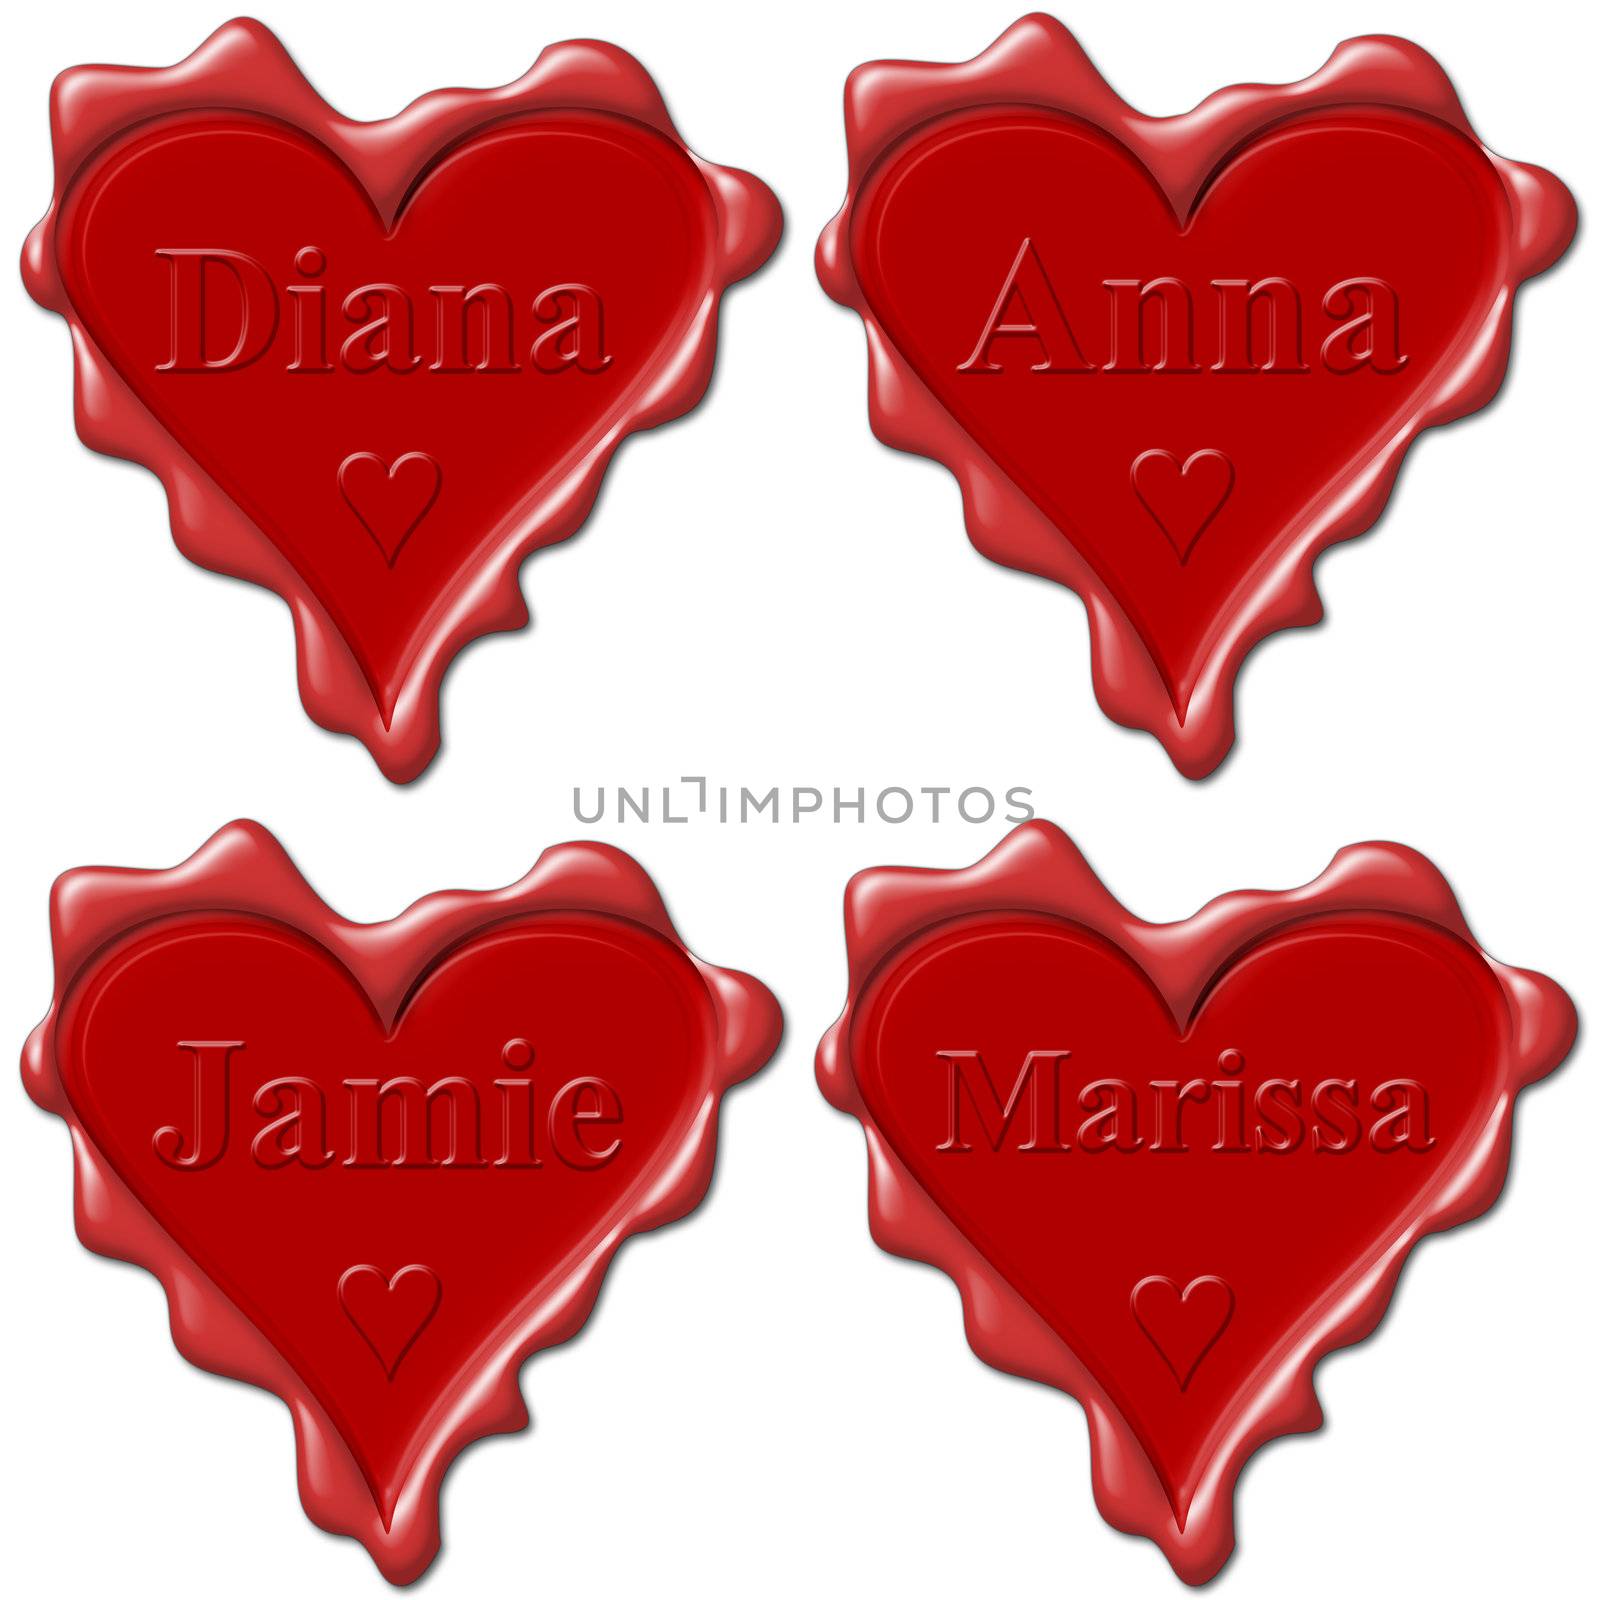 Valentine love hearts with names: Diana, Anna, Jamie, Marissa